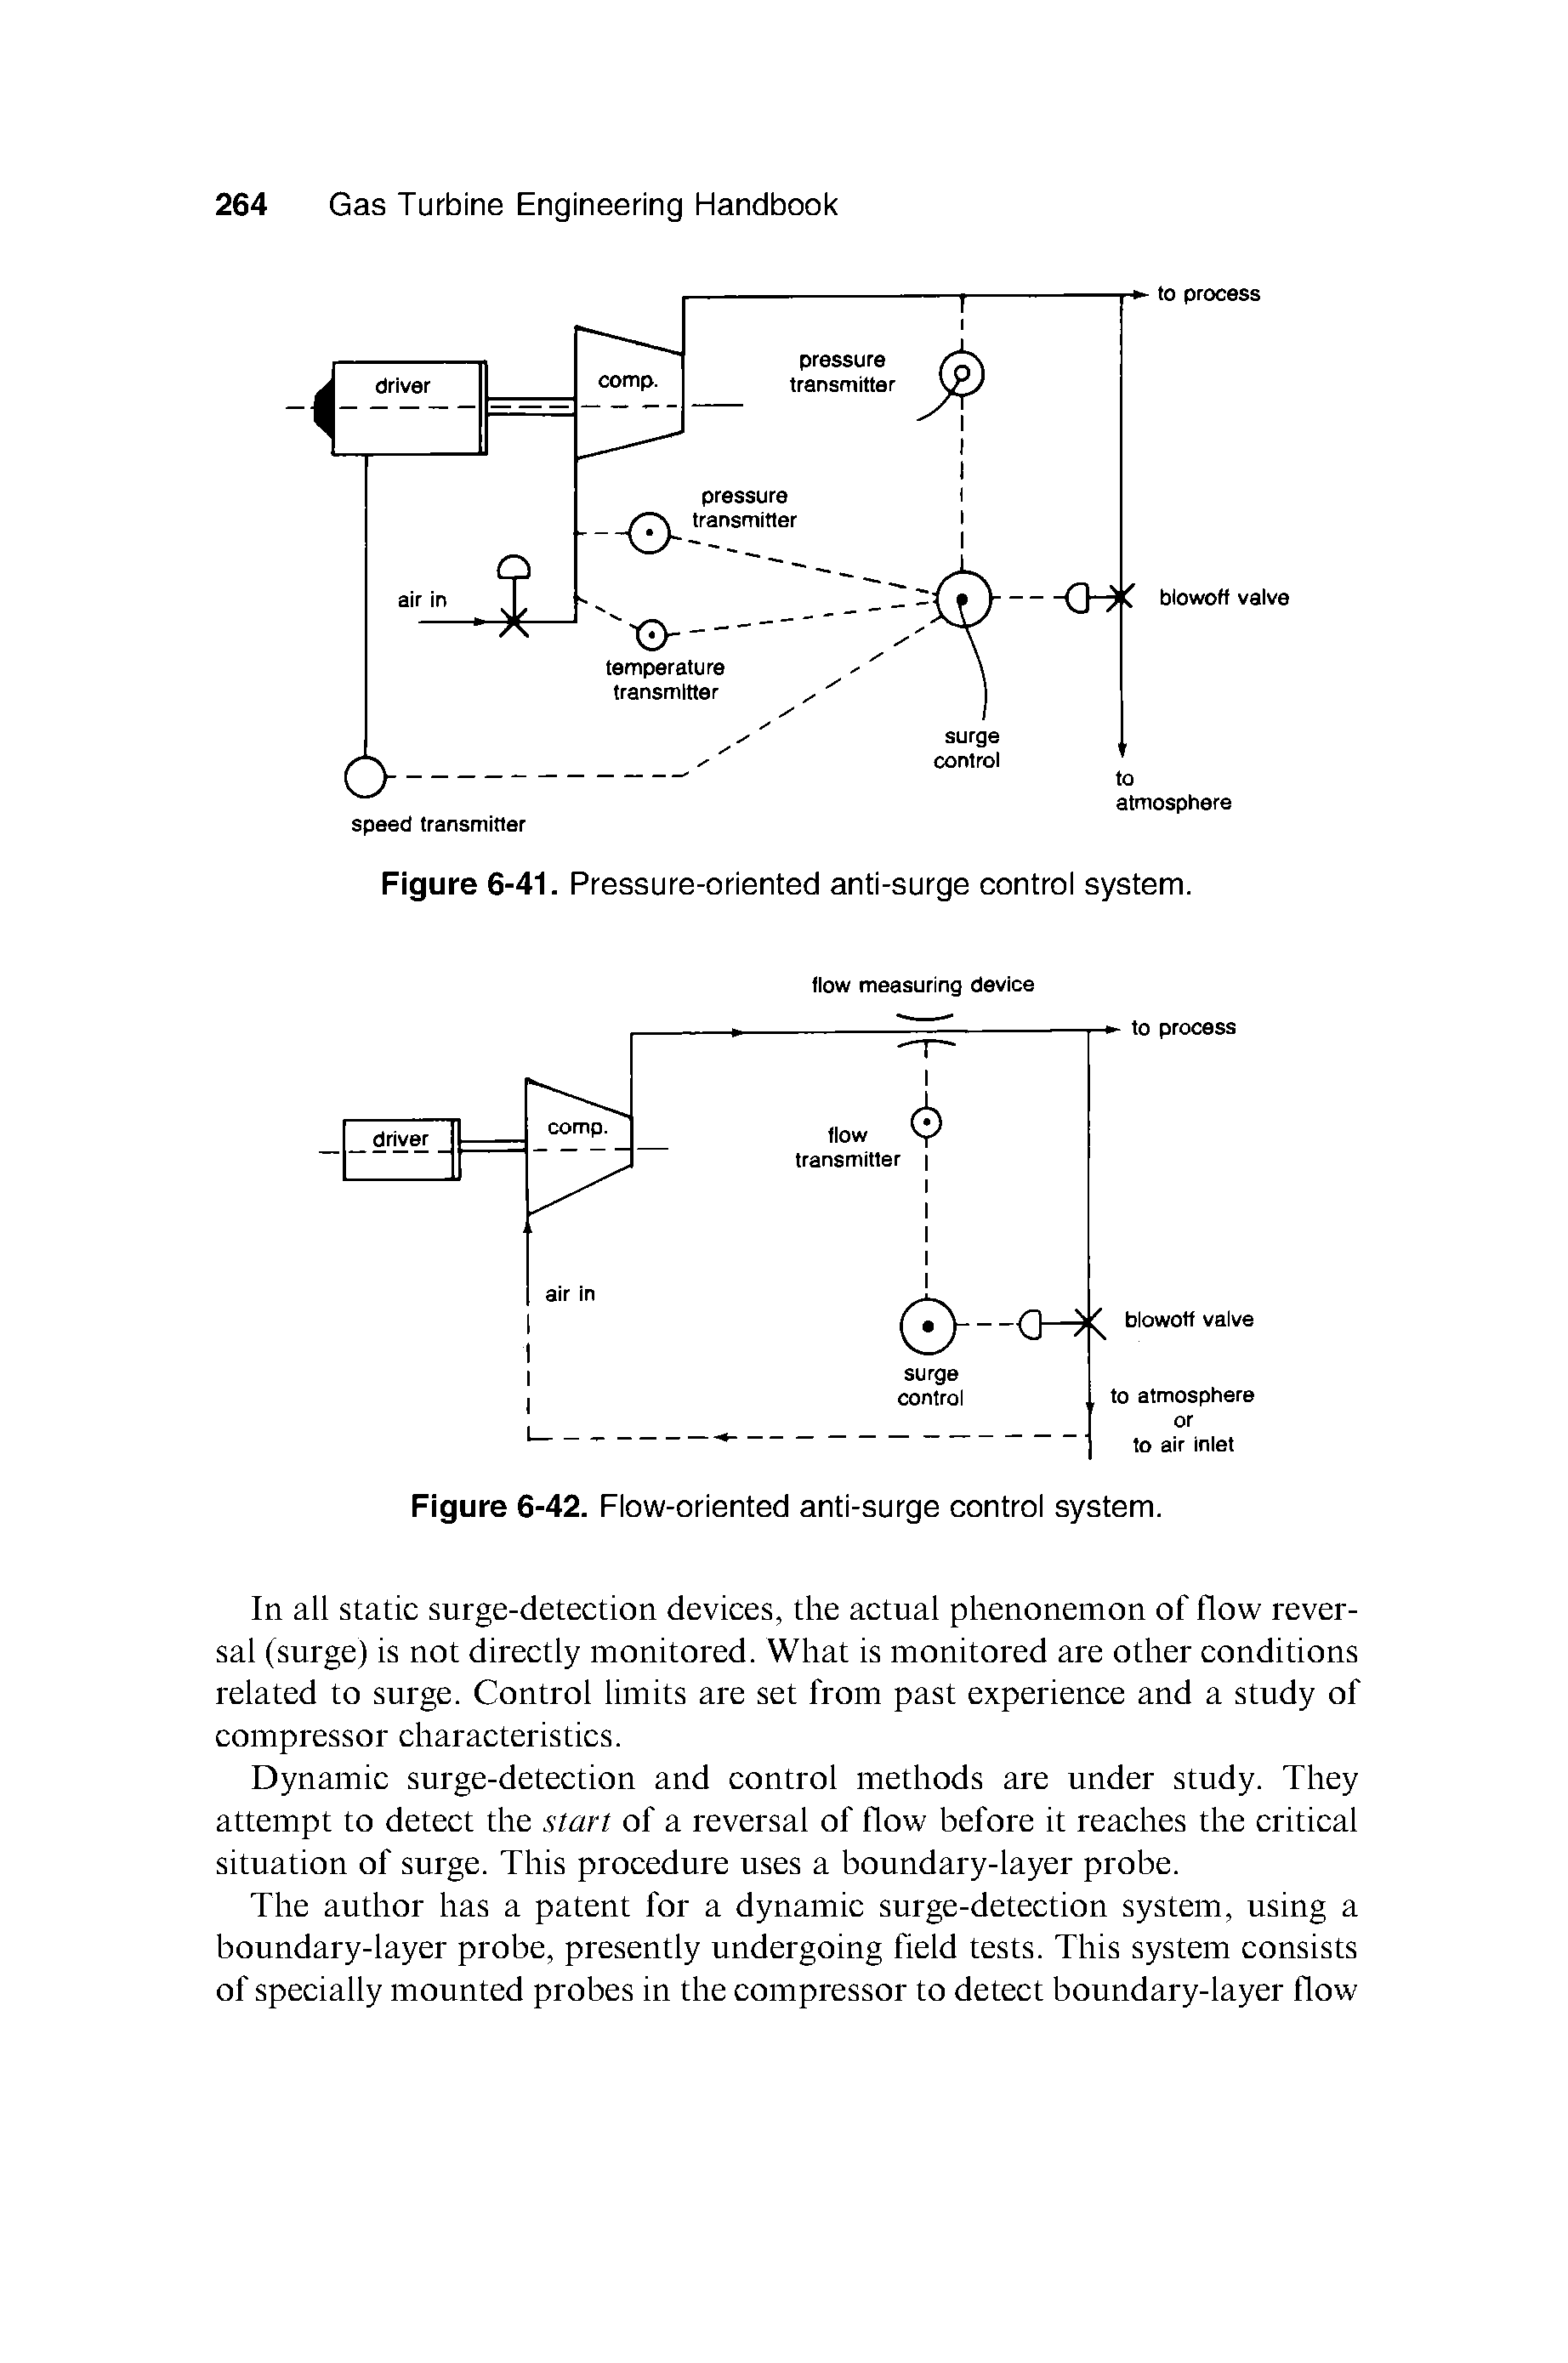 Figure 6-41. Pressure-oriented anti-surge eontroi system.